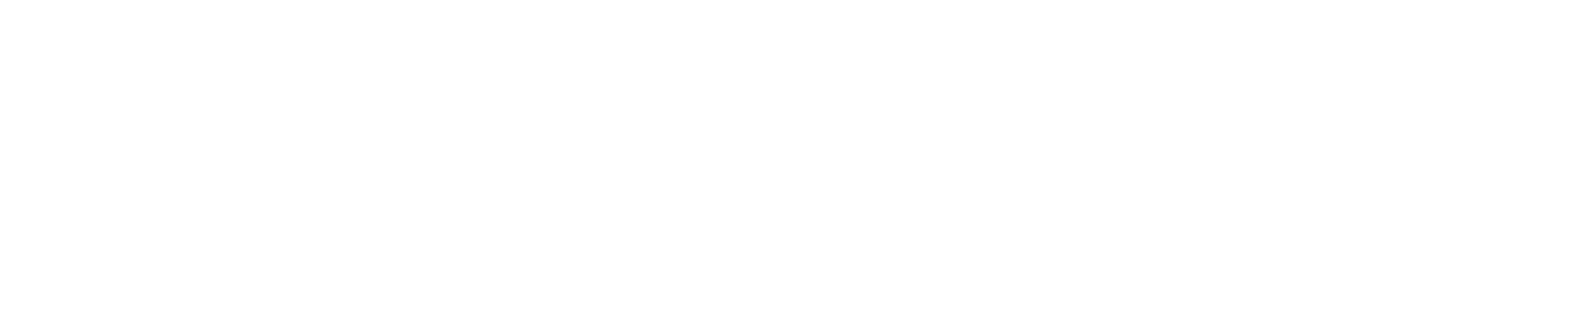 Canadian Utilities
 logo large for dark backgrounds (transparent PNG)